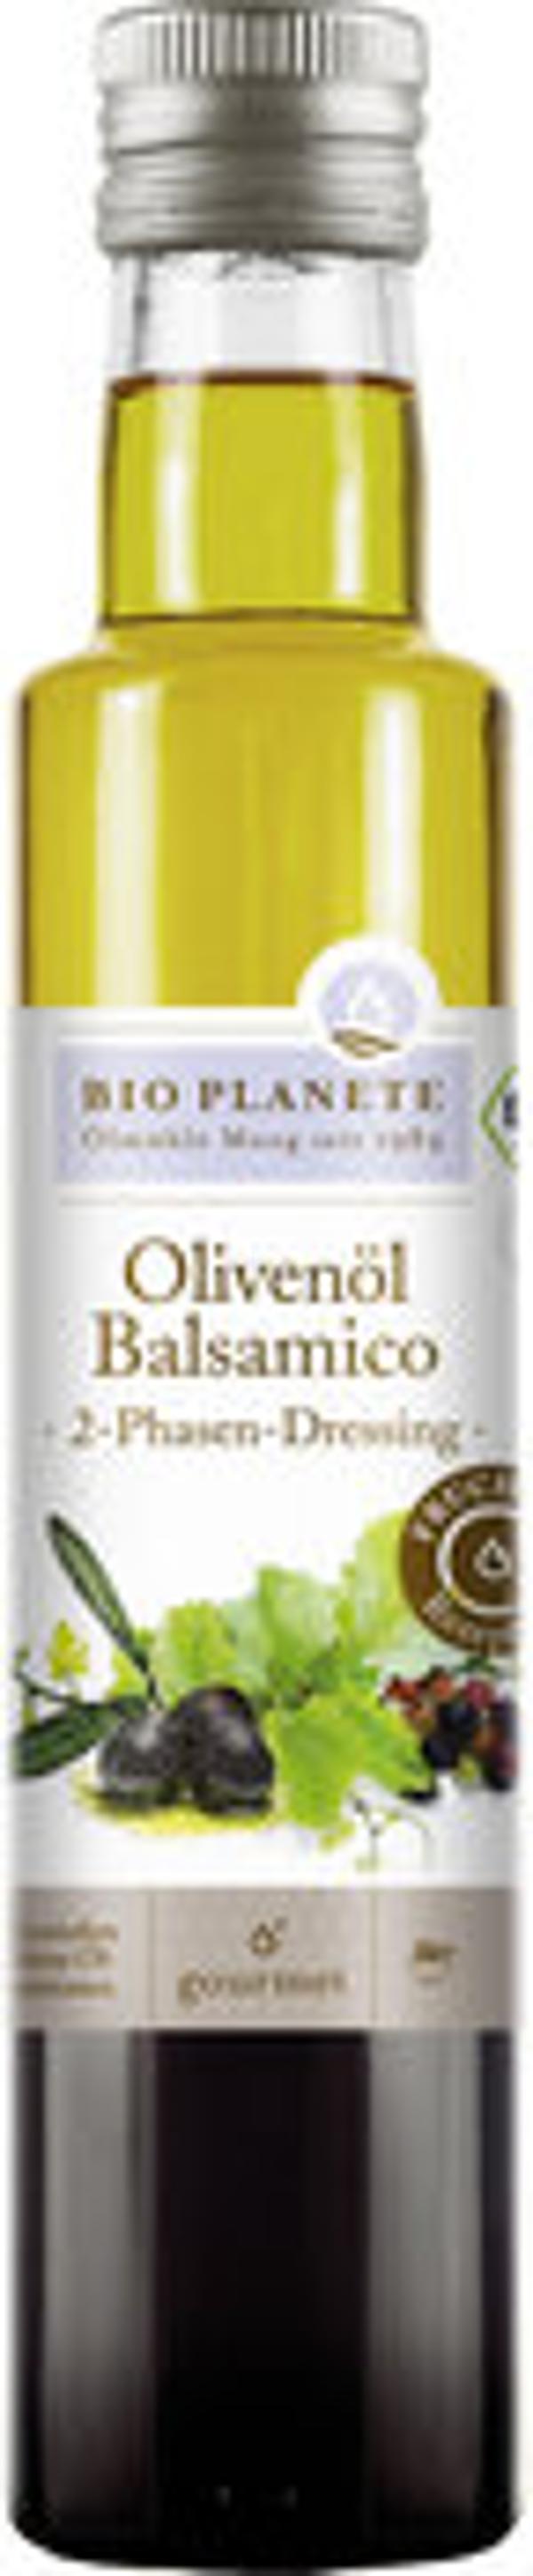 Produktfoto zu Olivenöl Balsamico 2-Phasen-Dressing